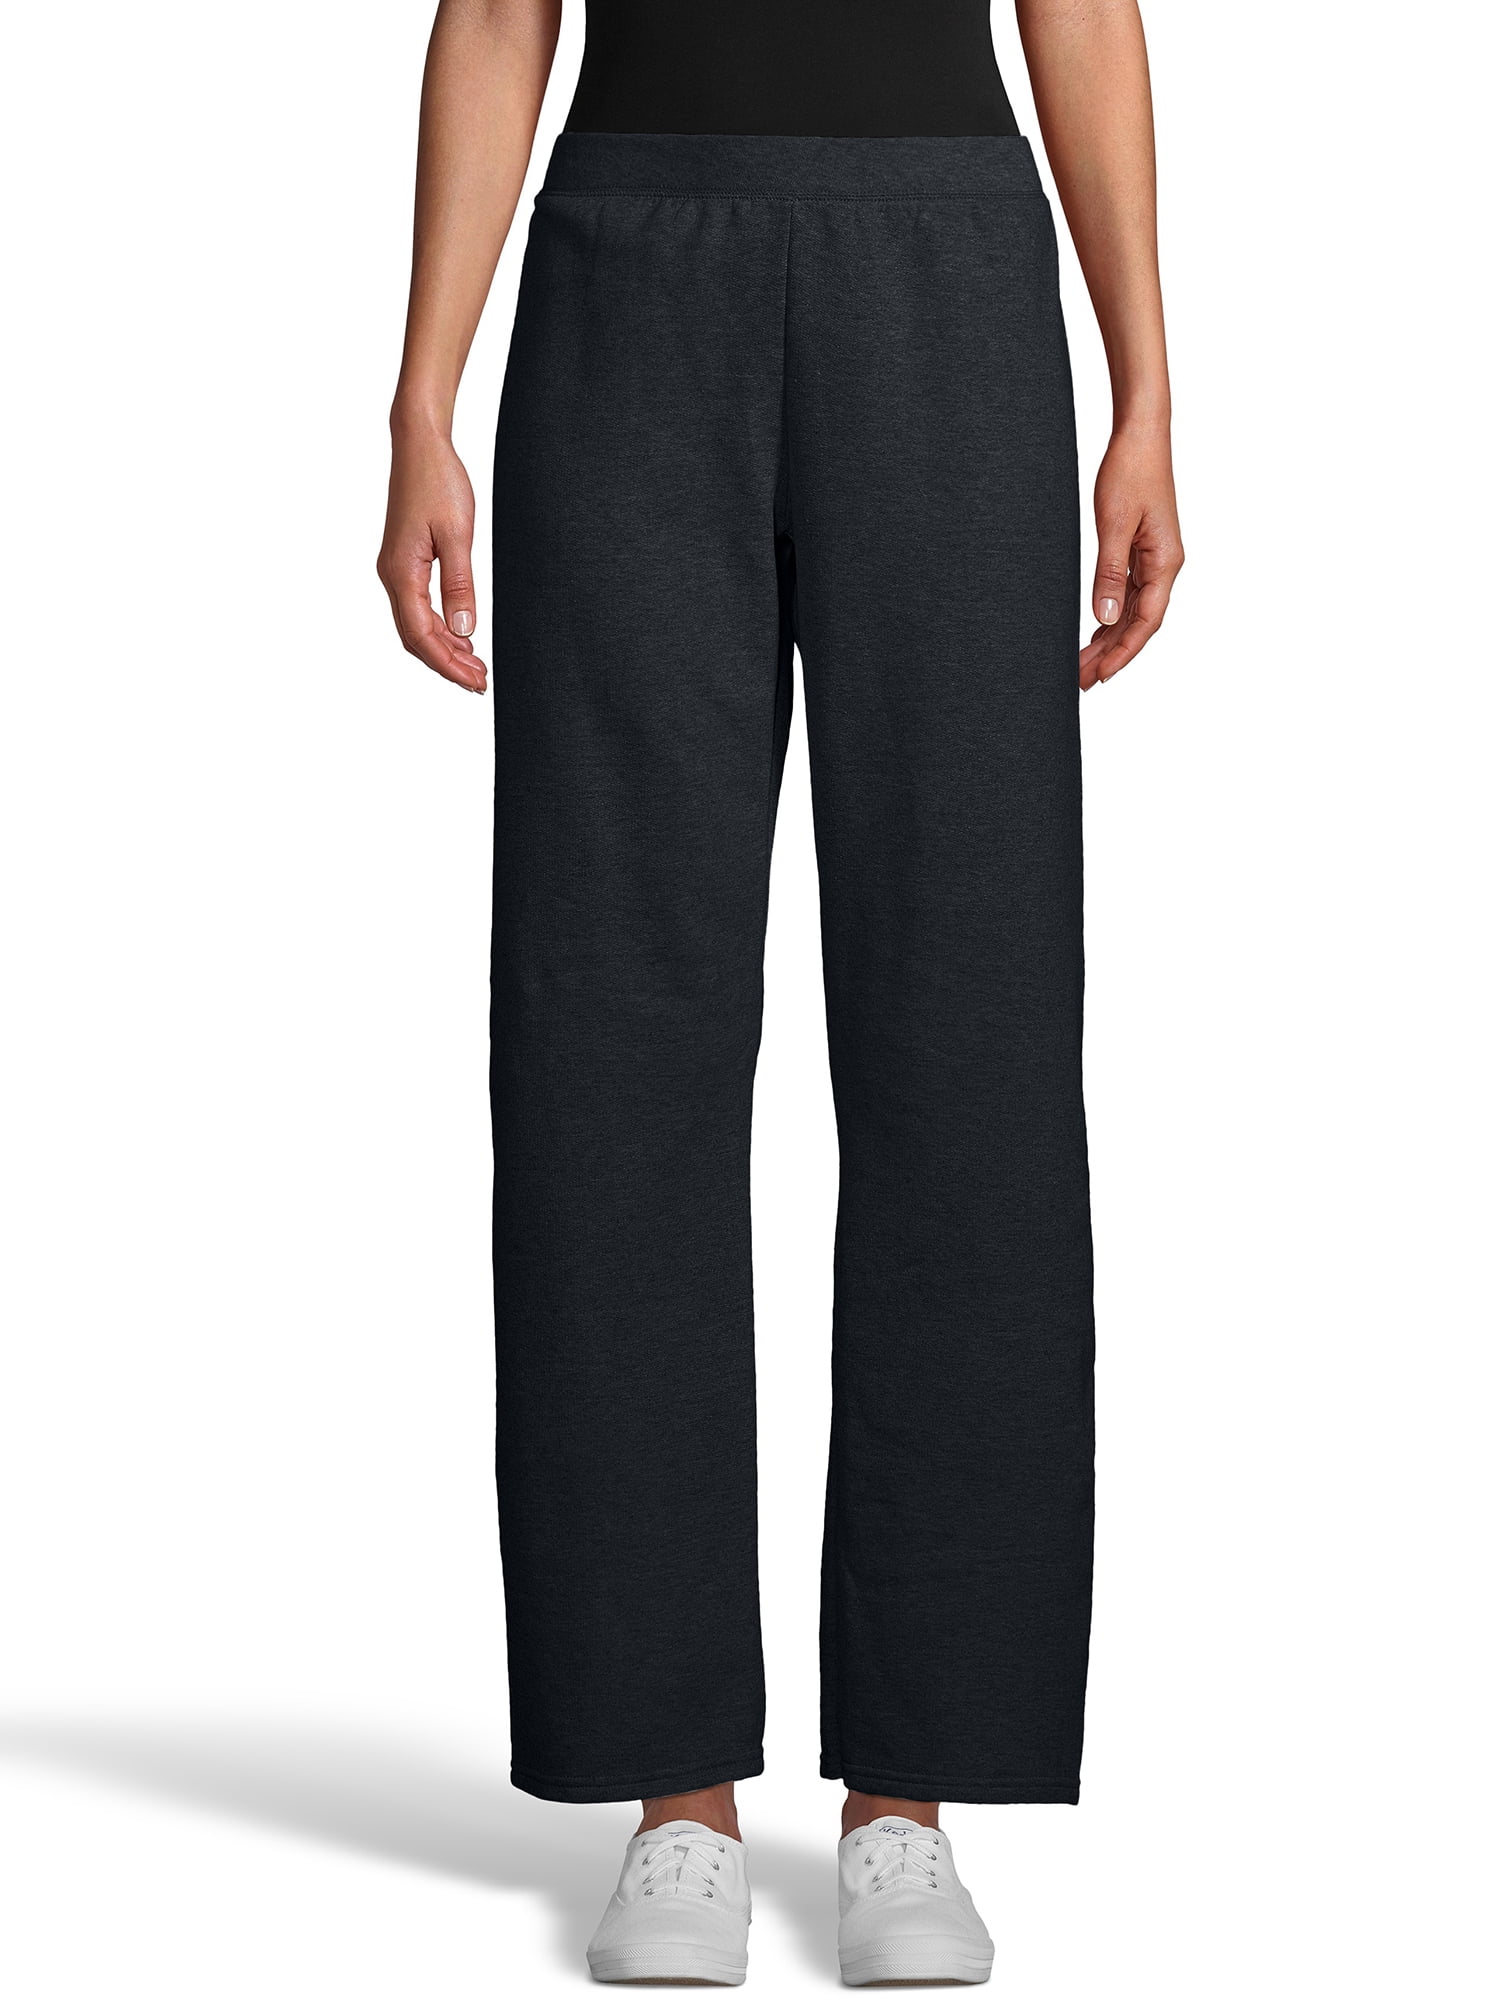 MaribelWool-Cashmere Pants Saks Fifth Avenue Women Clothing Pants Sweatpants 